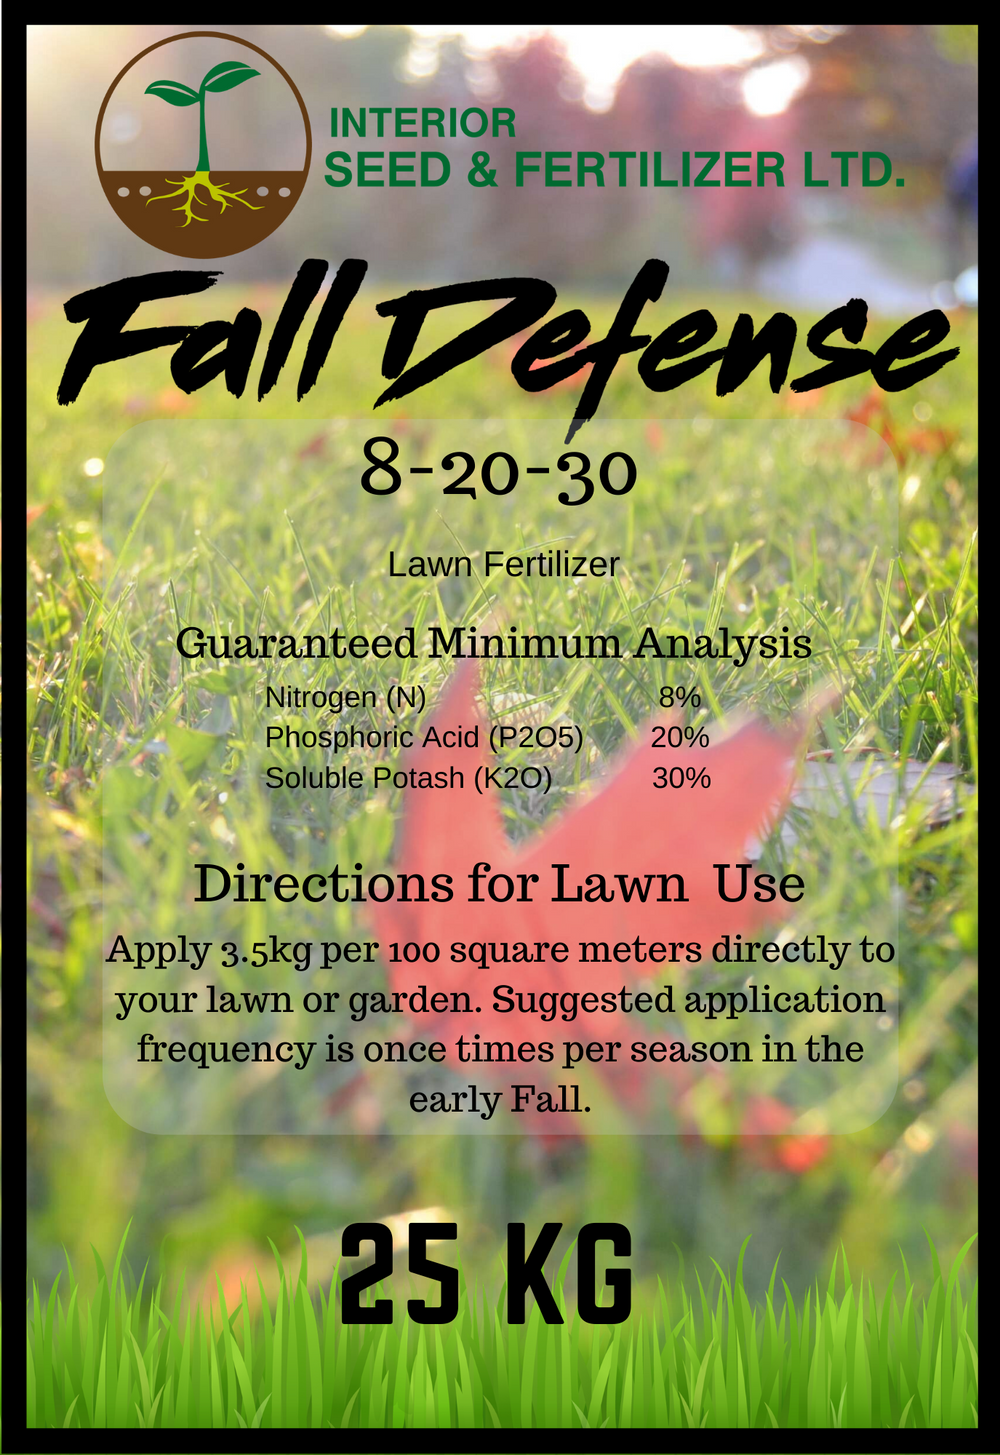 Fall Defense Lawn Fertilizer. Prepare your lawn for autumn and winter. 8-20-30 Fertilizer from Interior Seed and Fertilizer Garden Centre in Cranbrook, BC